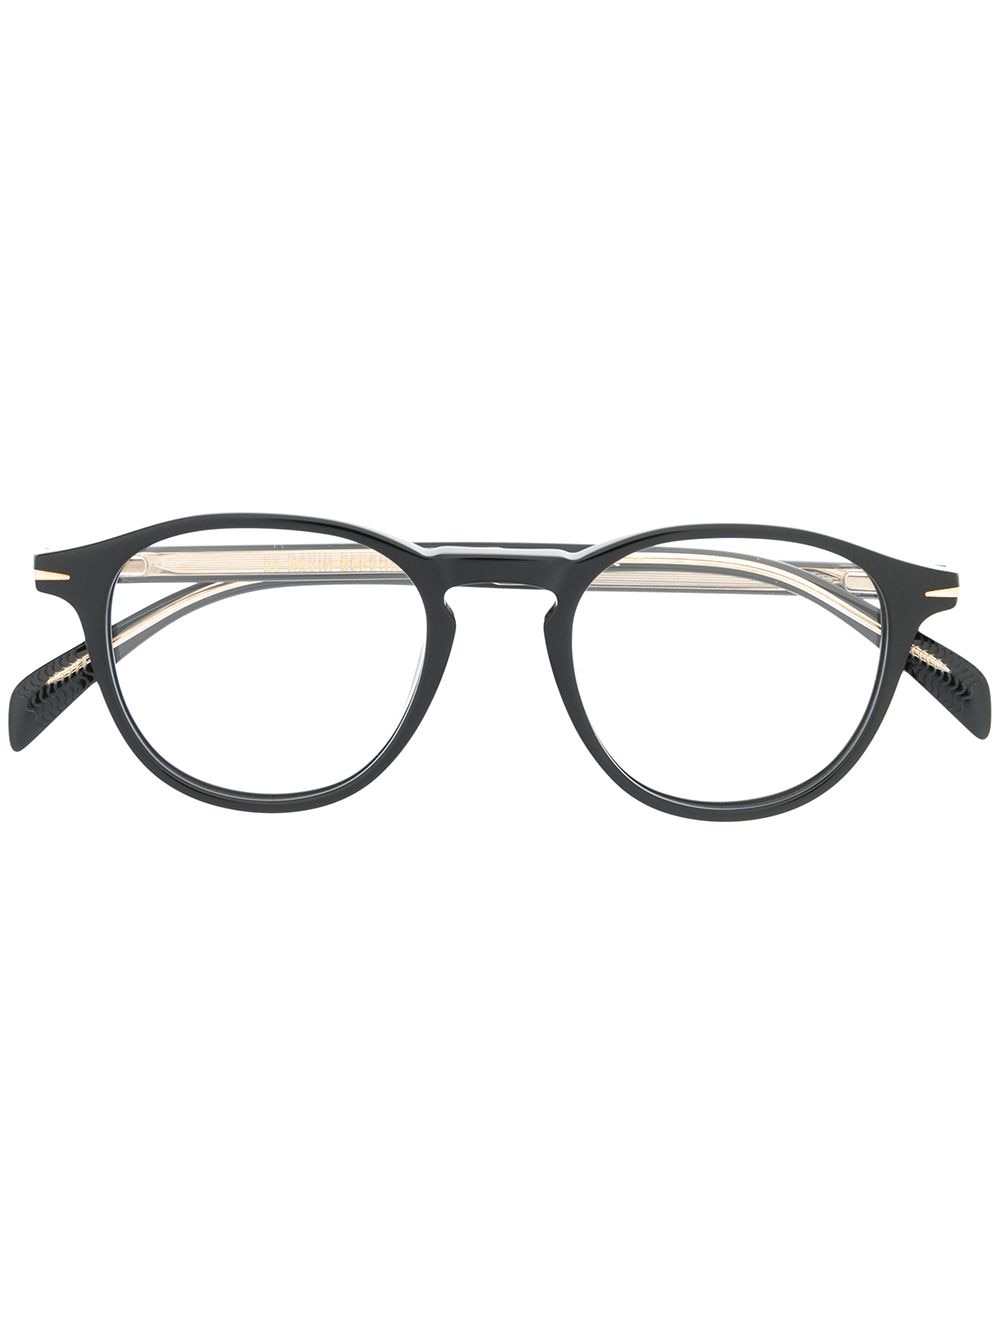 Eyewear by David Beckham round frame glasses - Black von Eyewear by David Beckham